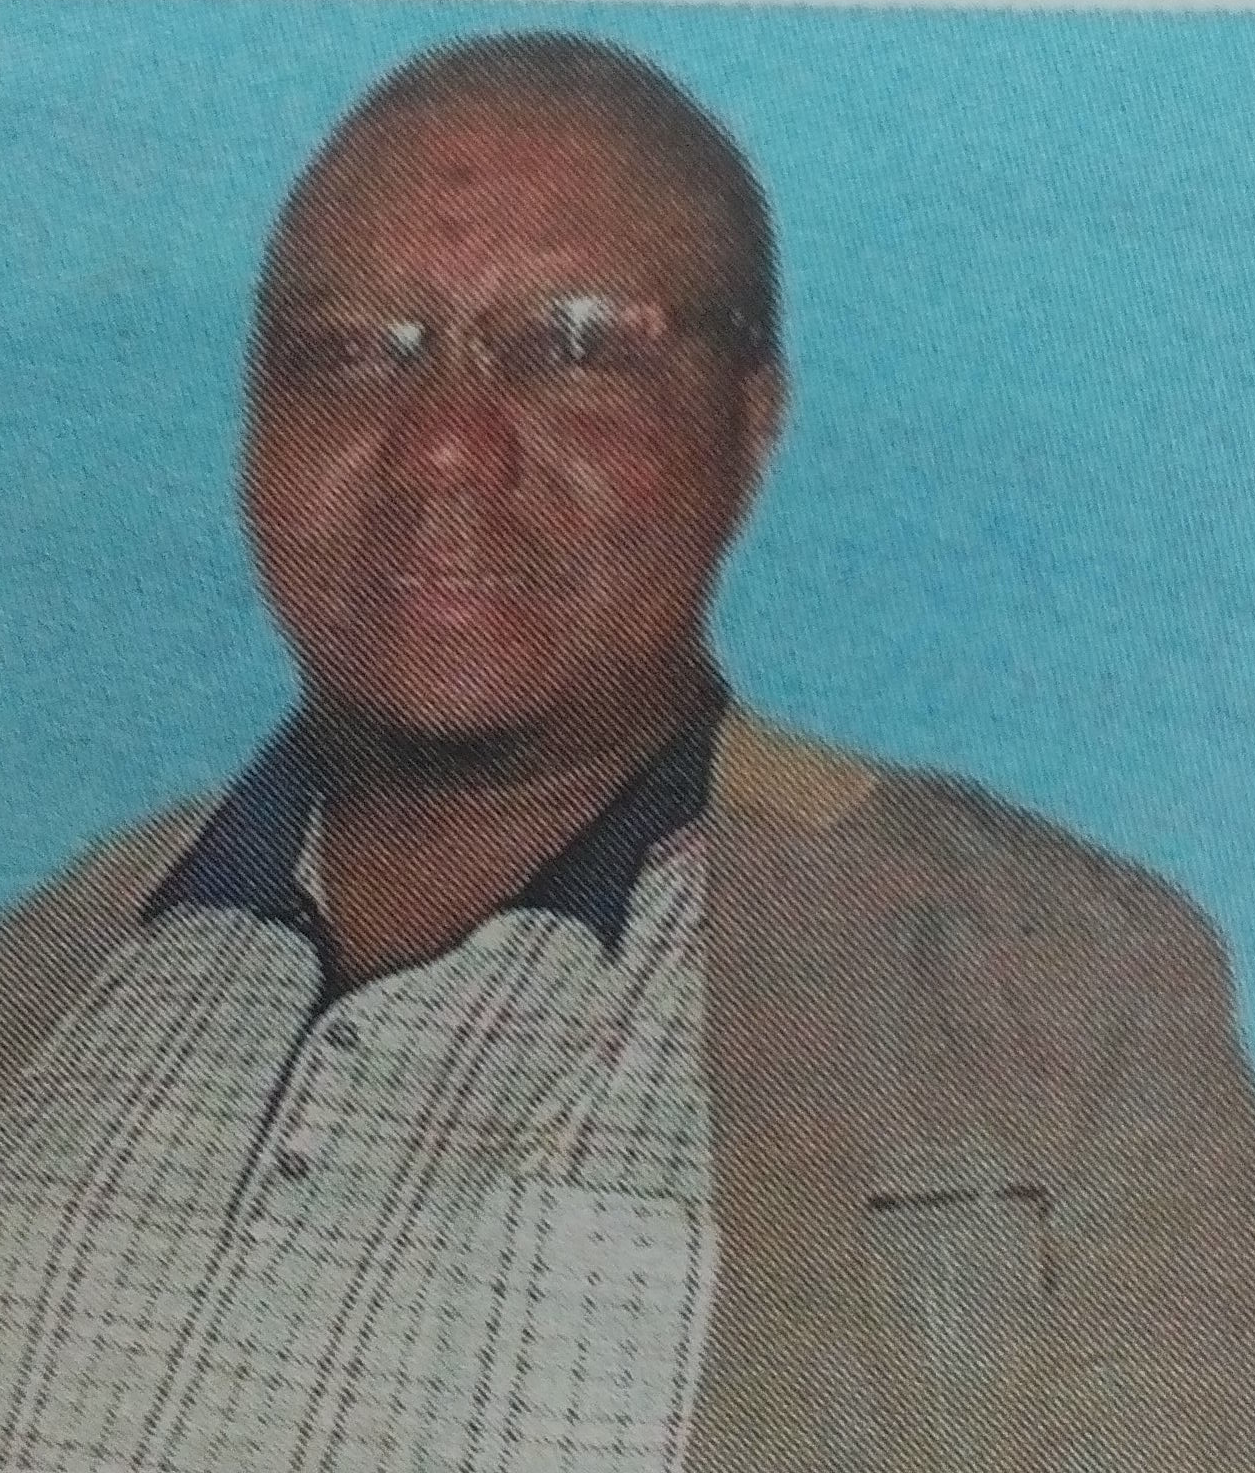 Obituary Image of Stephen Kamau Murima (Sheikh)